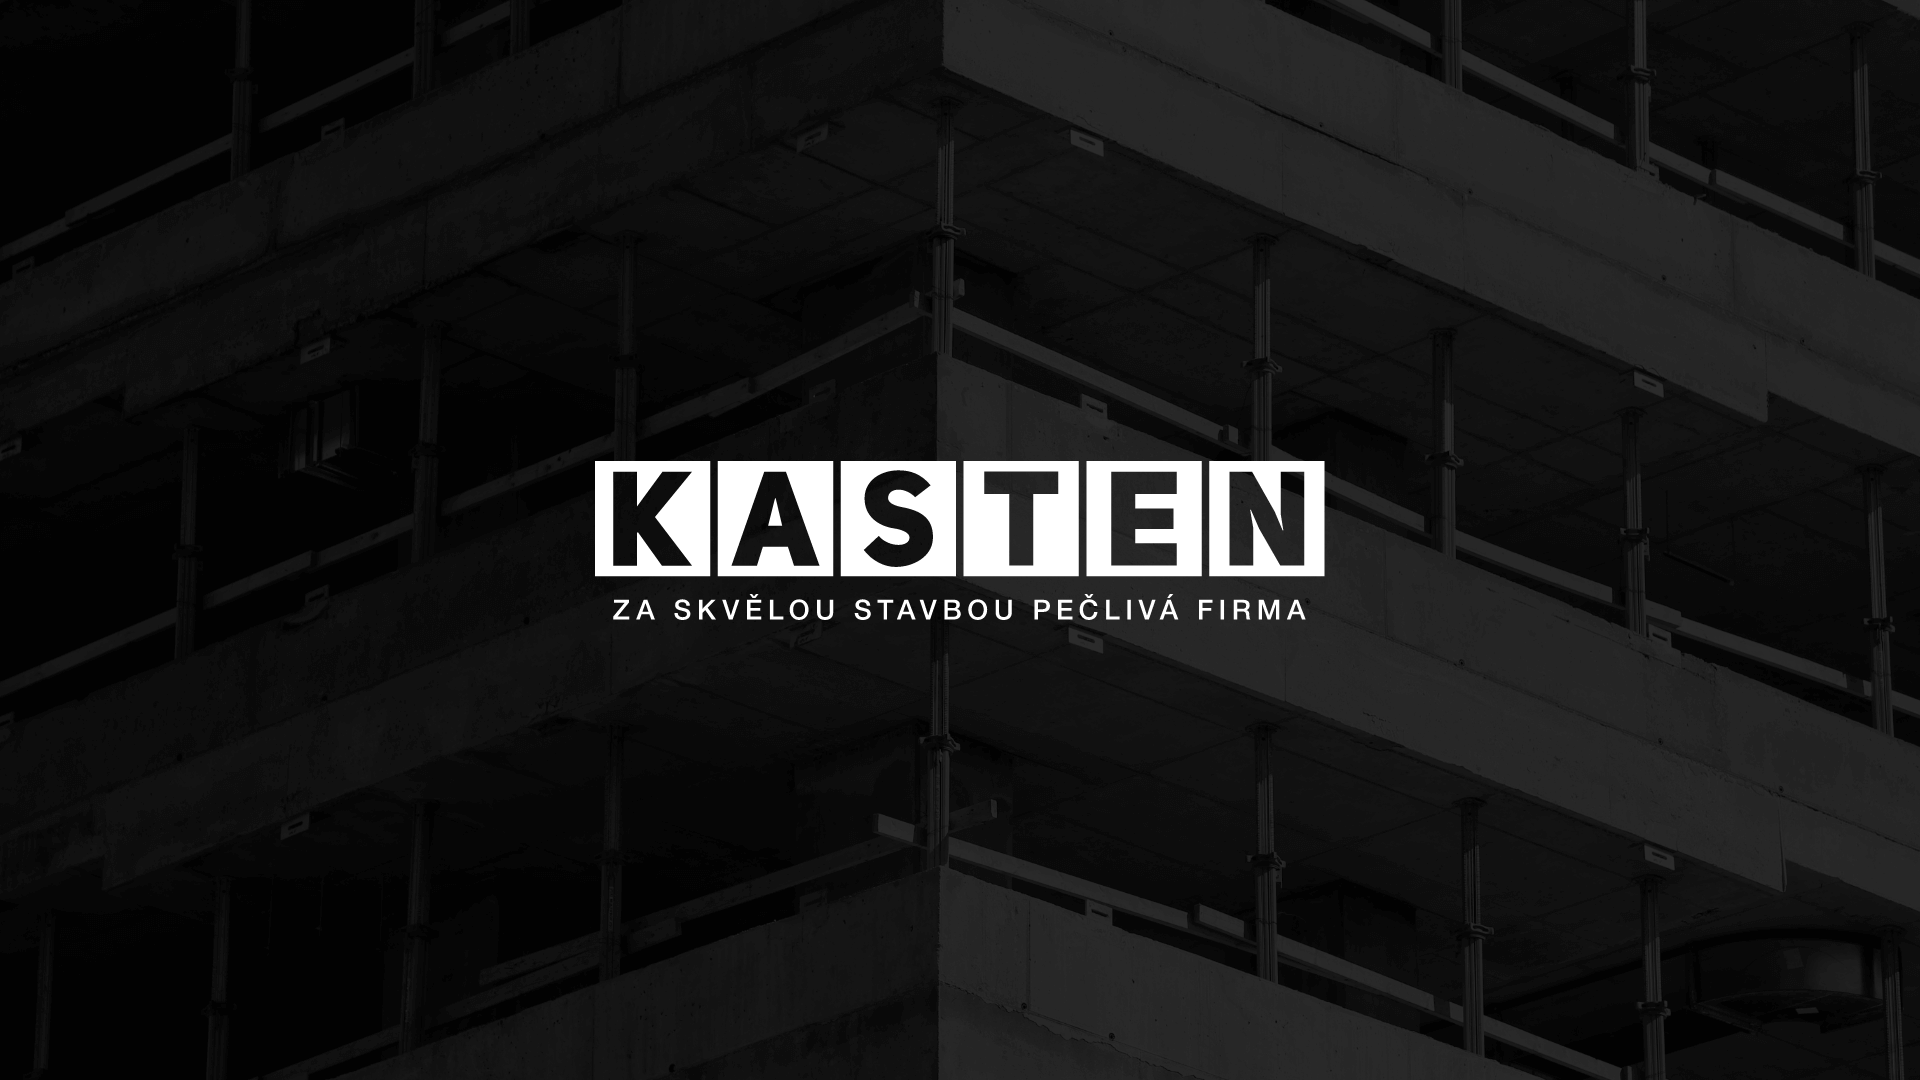 Logo Kasten